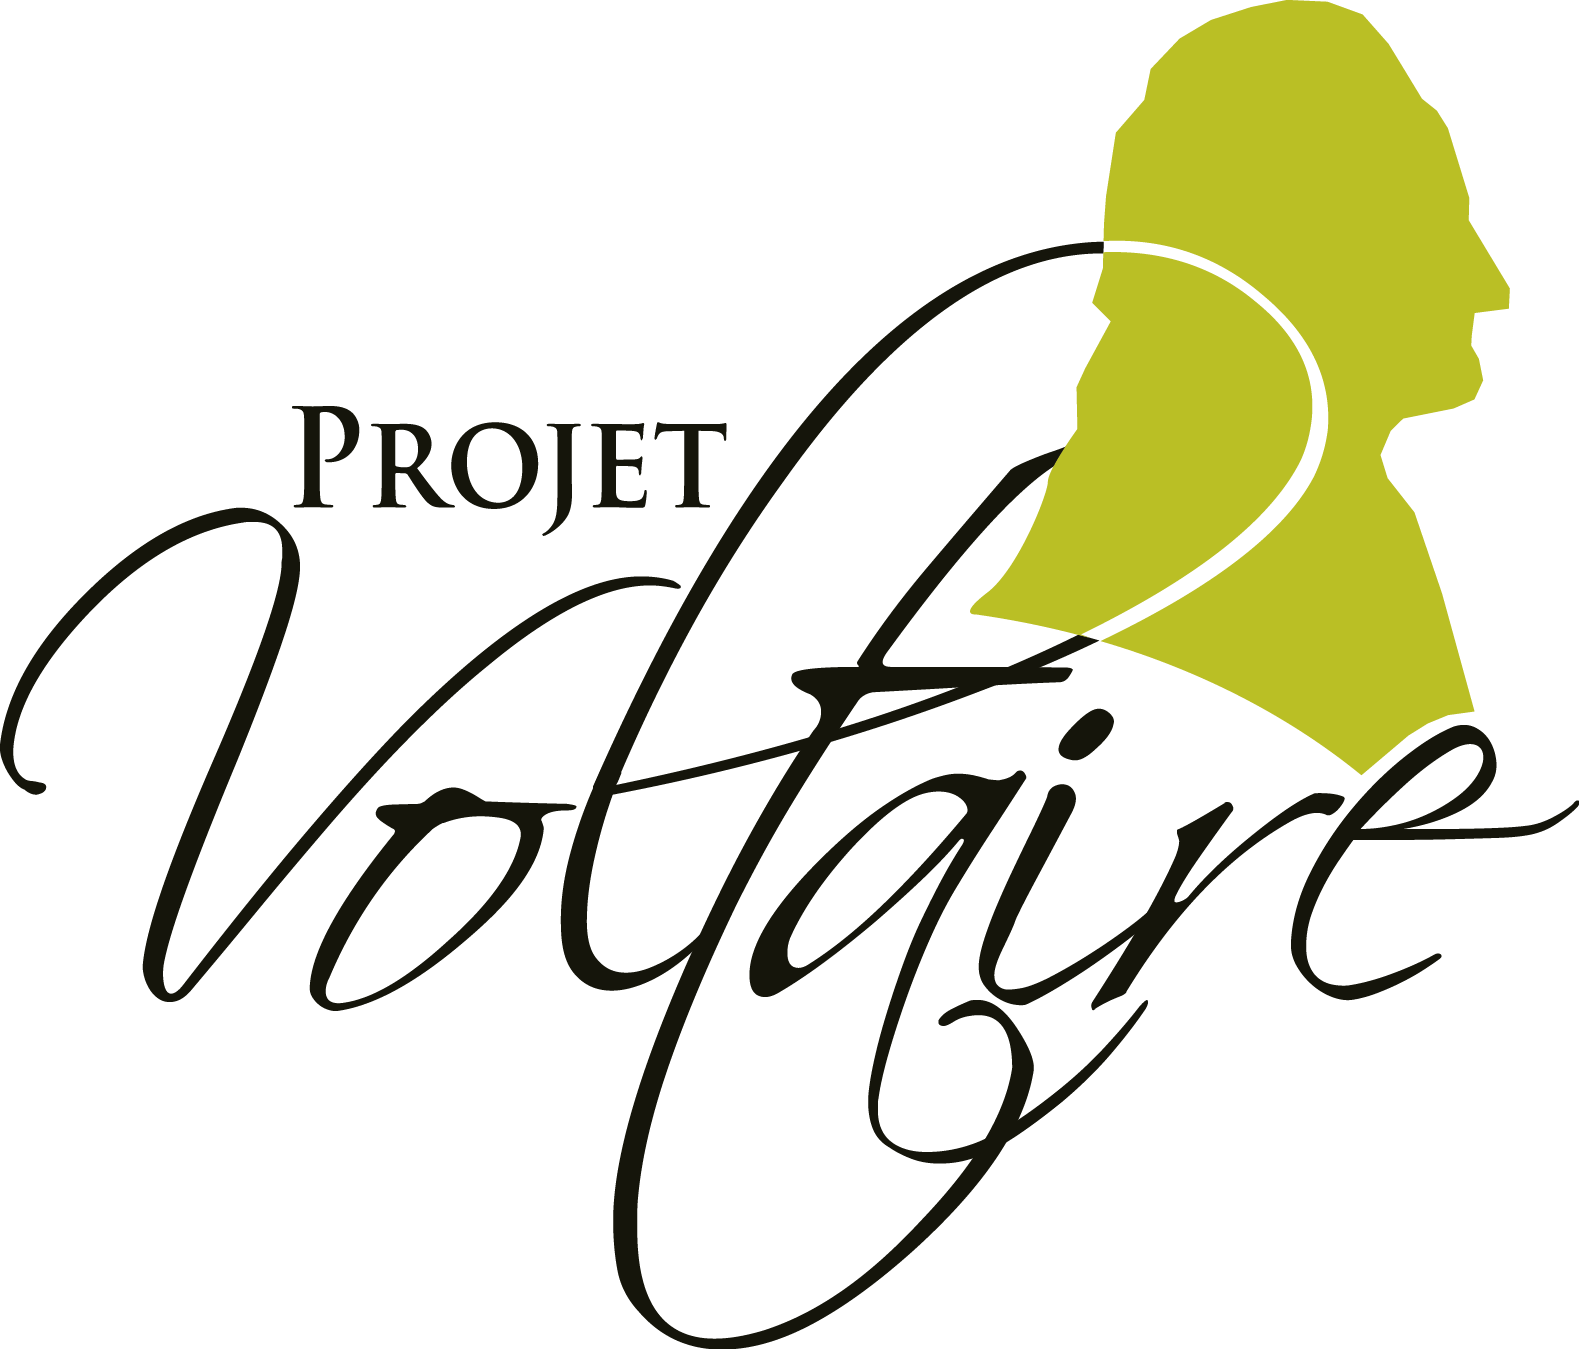 Voltaire Logo - WOONOZ VOLTAIRE Technologies France 2018 Eng